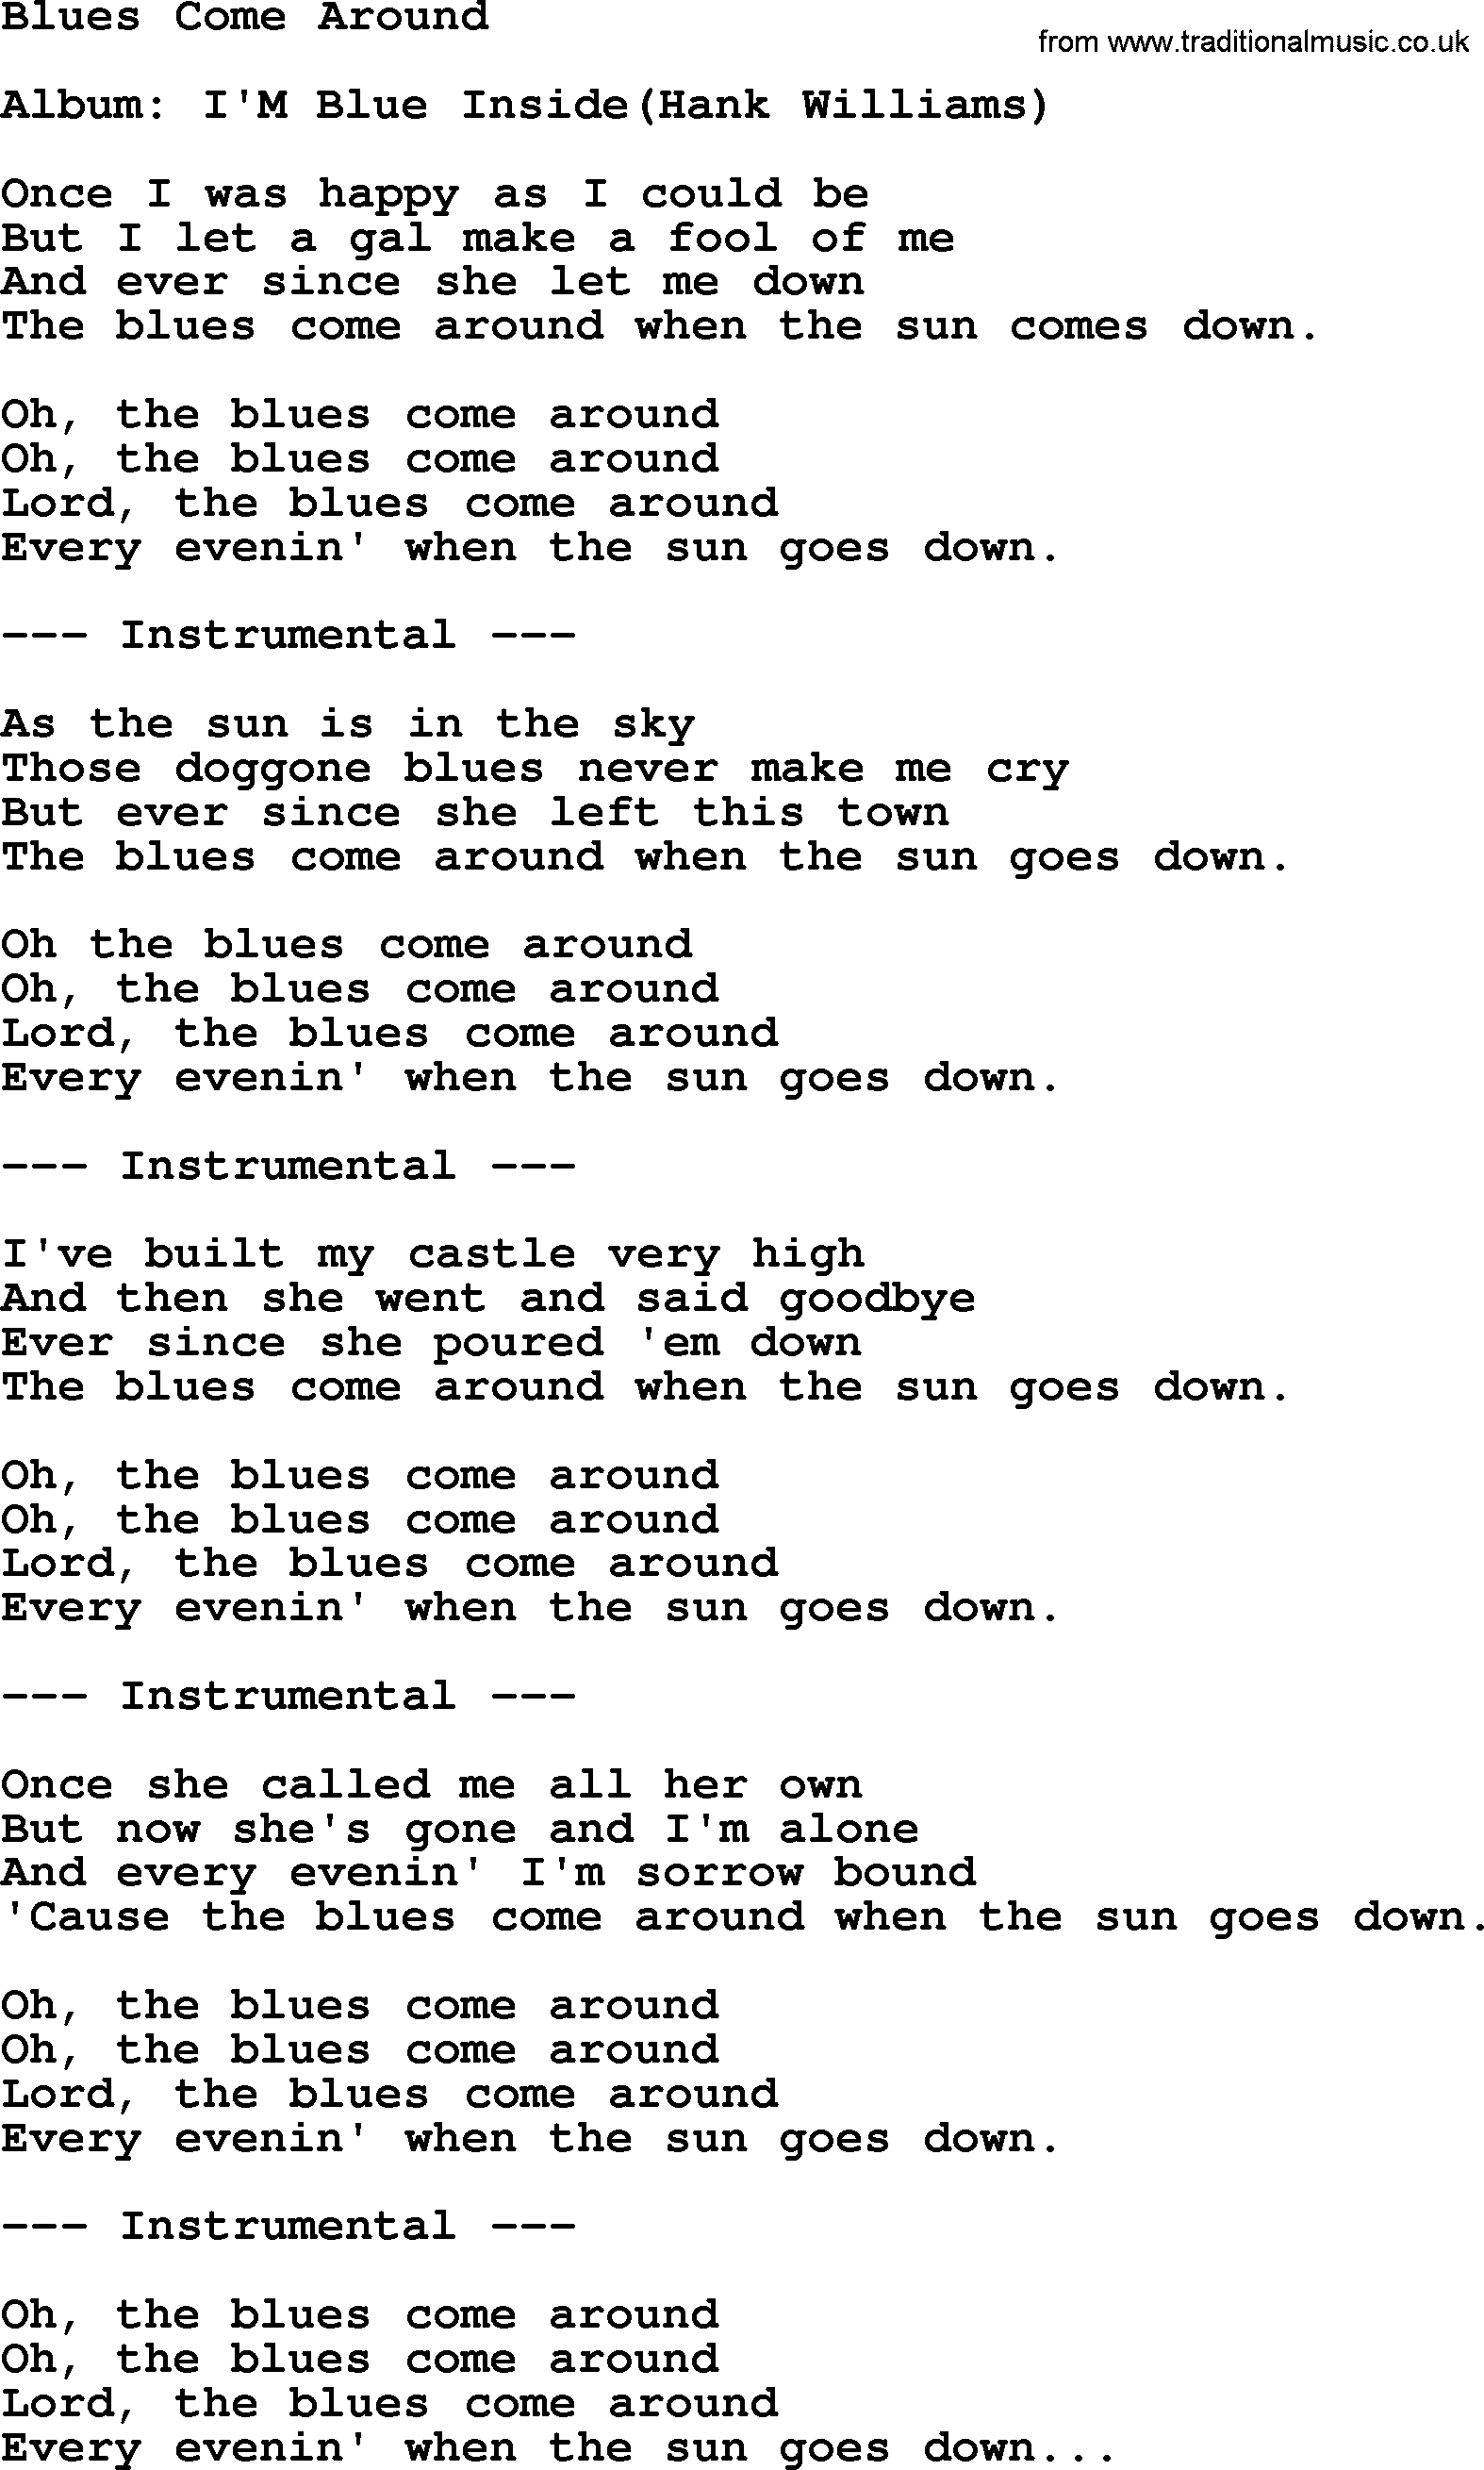 Hank Williams song Blues Come Around, lyrics